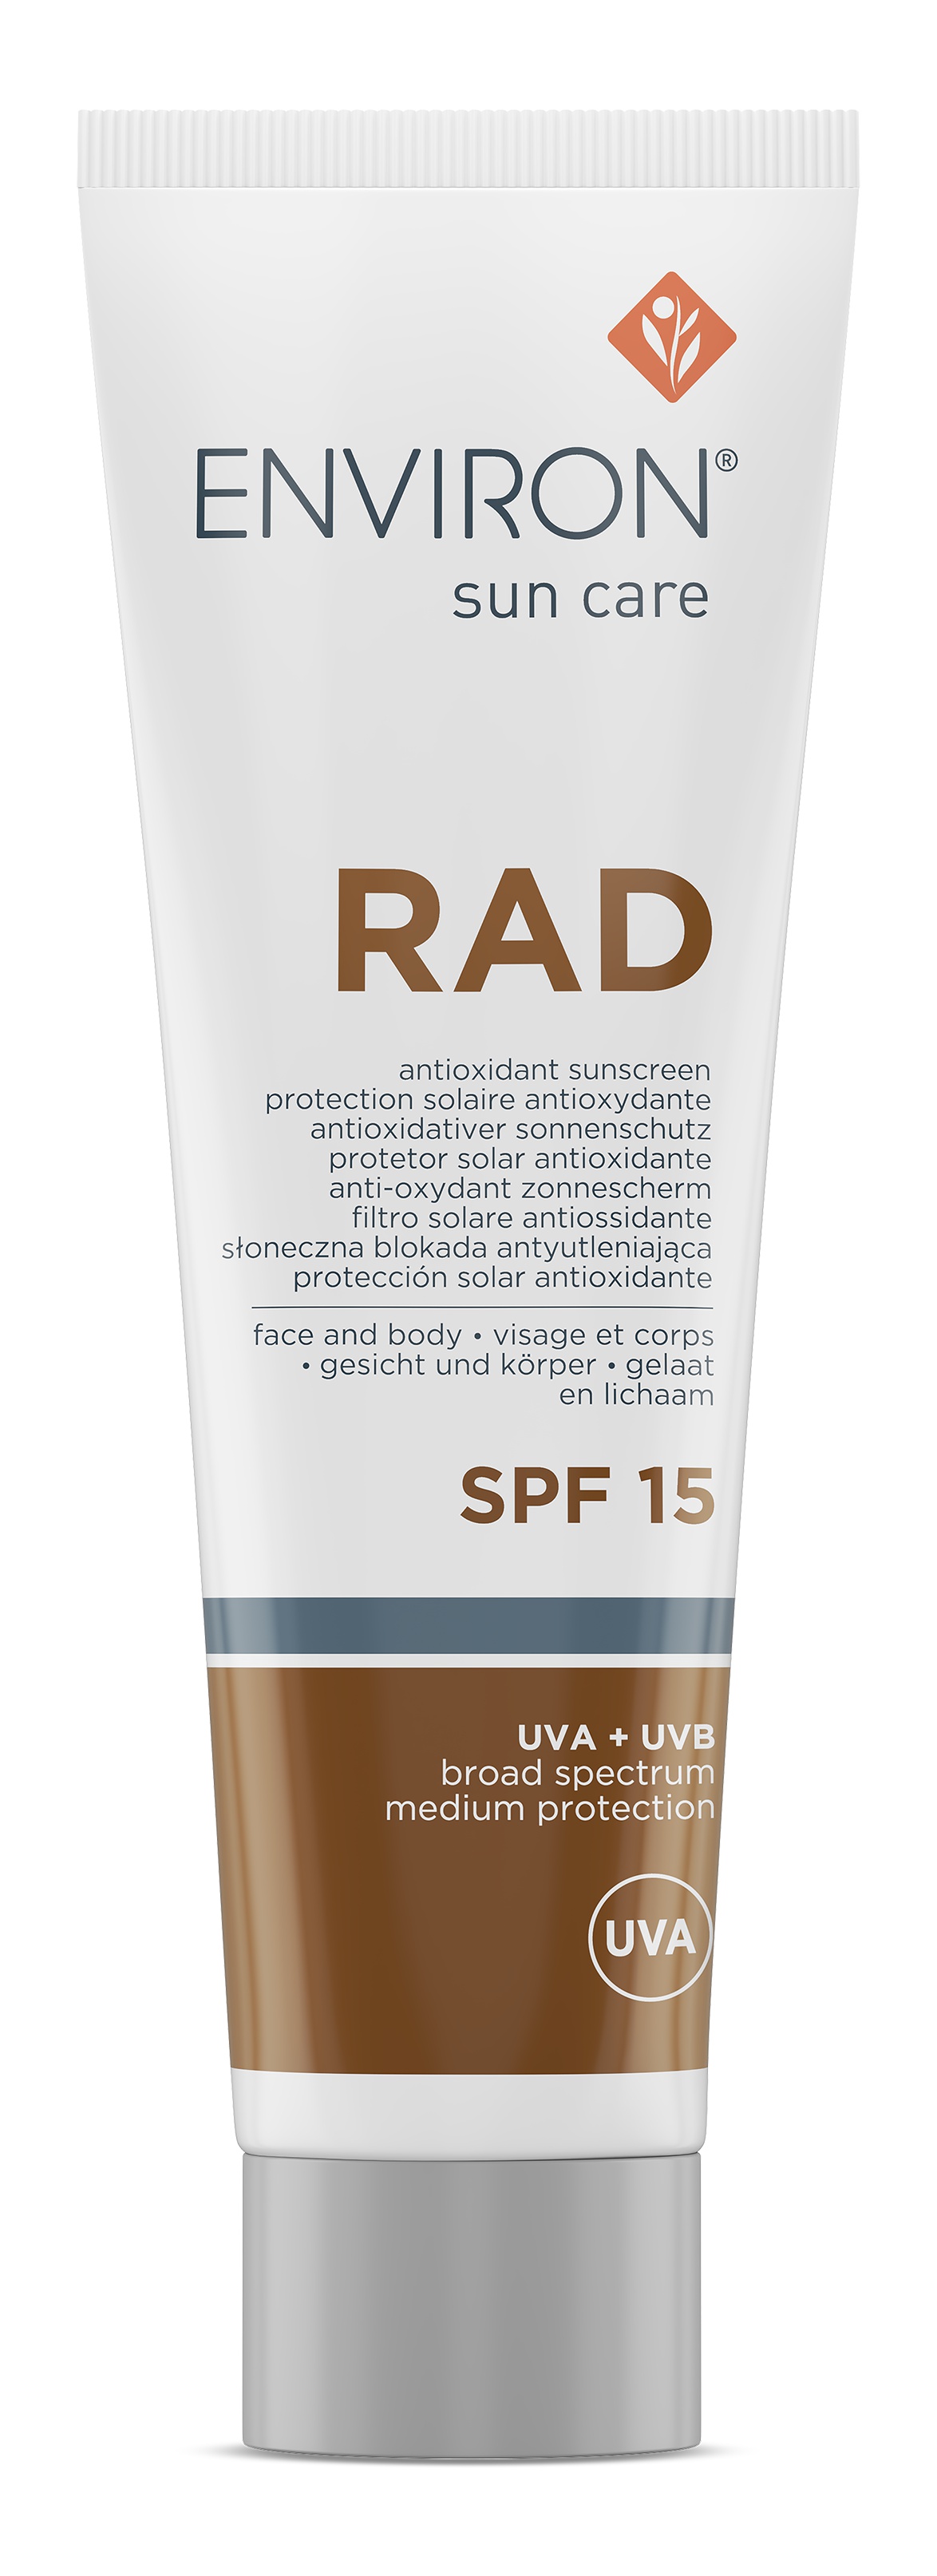 Environ Rad Antioxidant Sunscreen Spf15